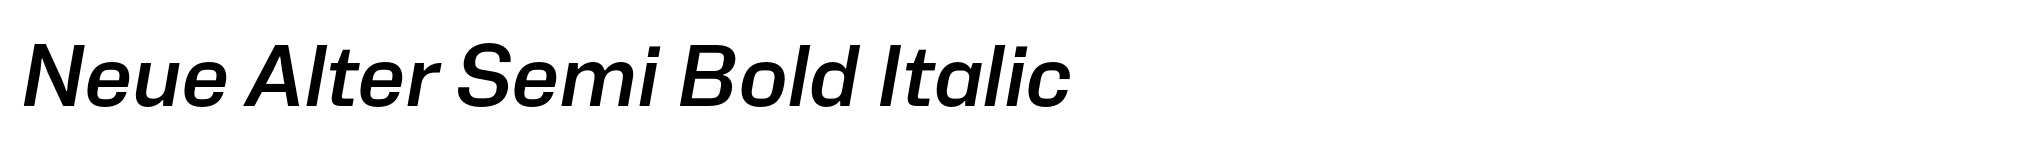 Neue Alter Semi Bold Italic image